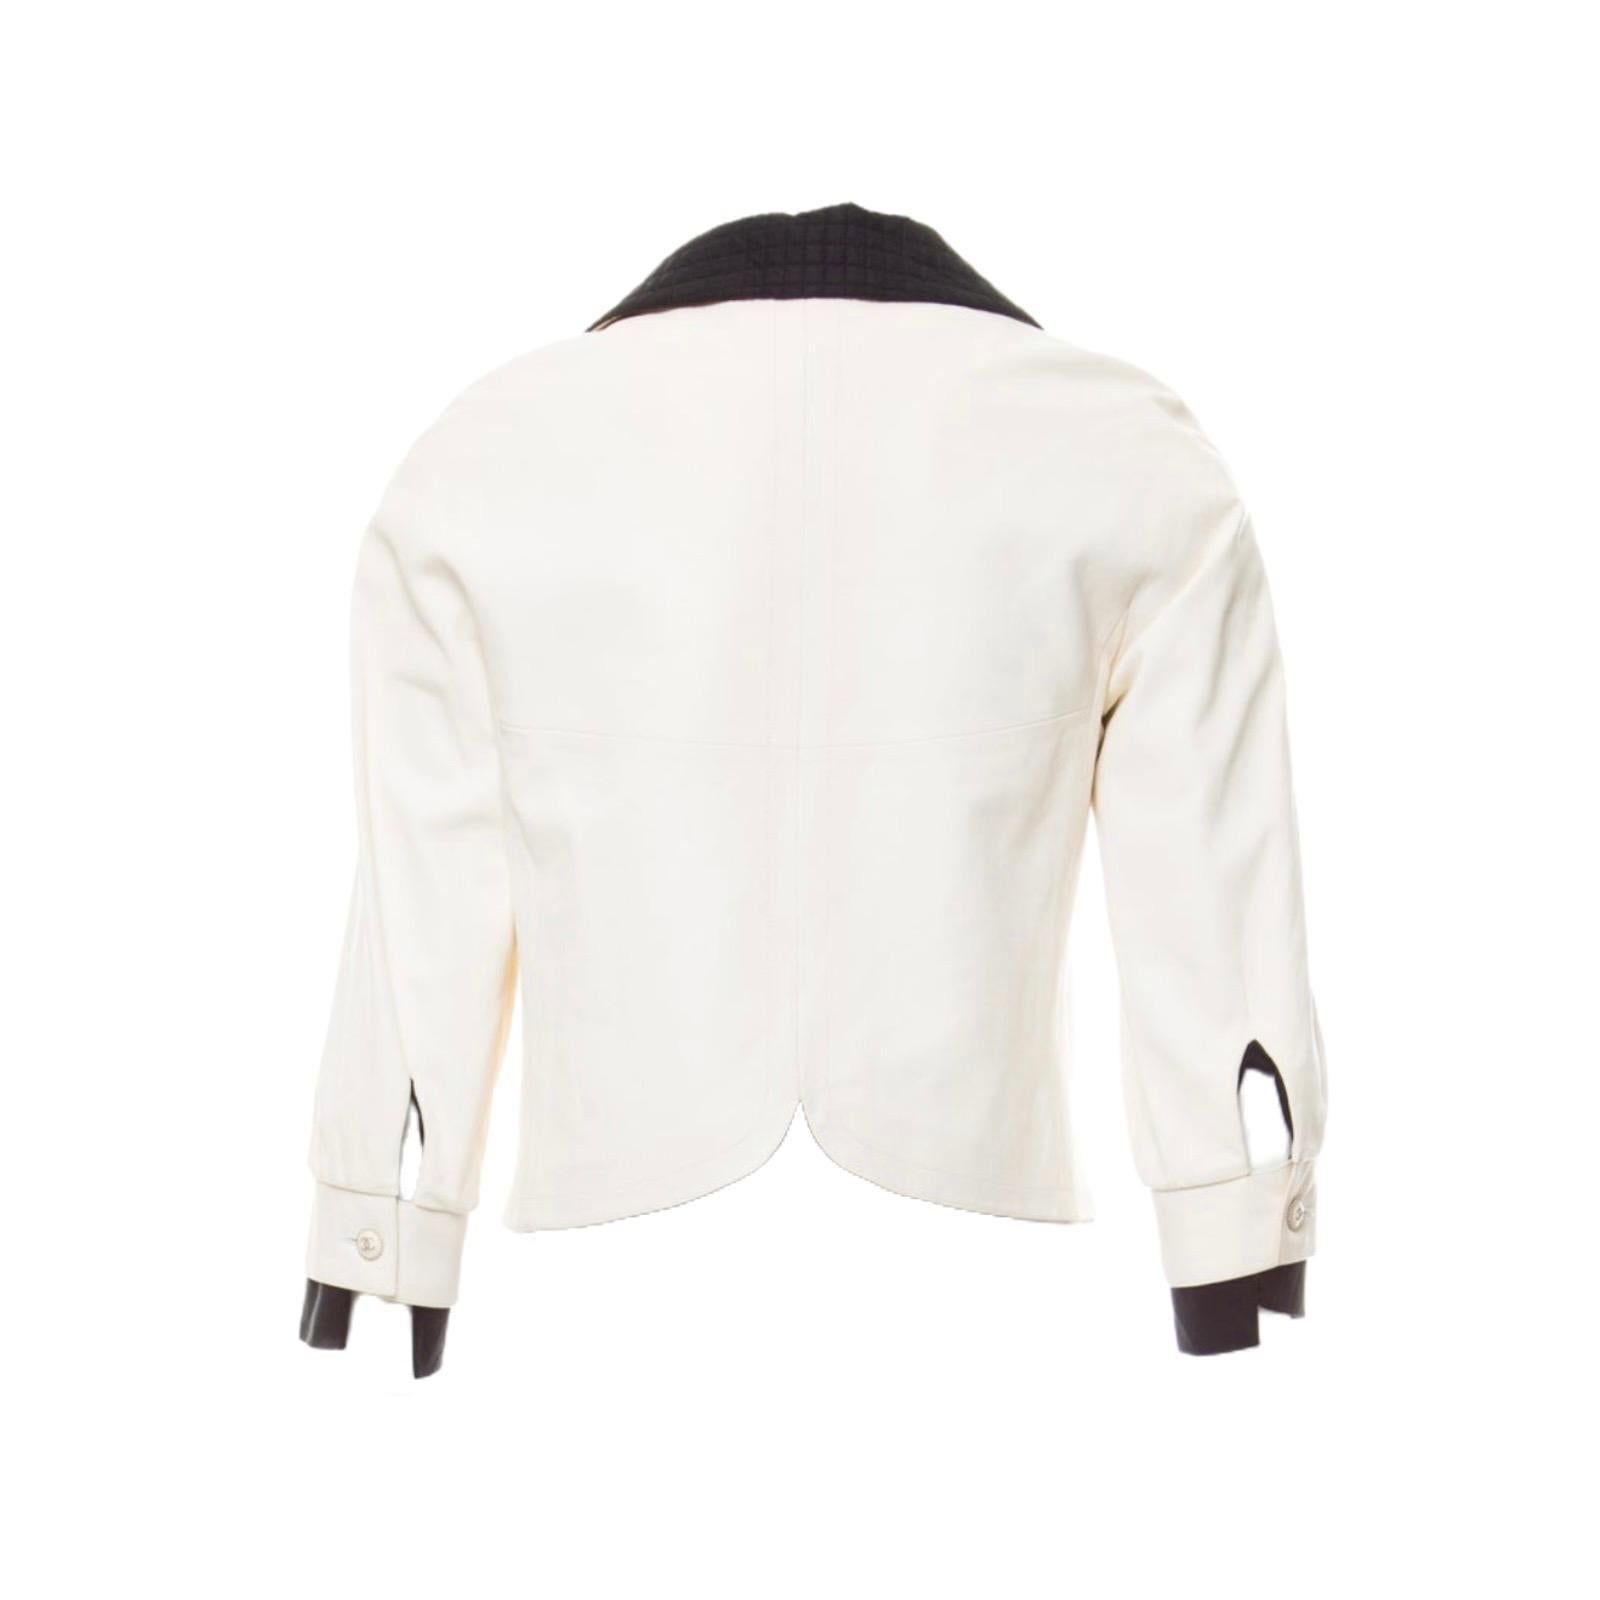 White UNWORN Chanel Ivory Finest Lambskin Leather Jacket Blazer